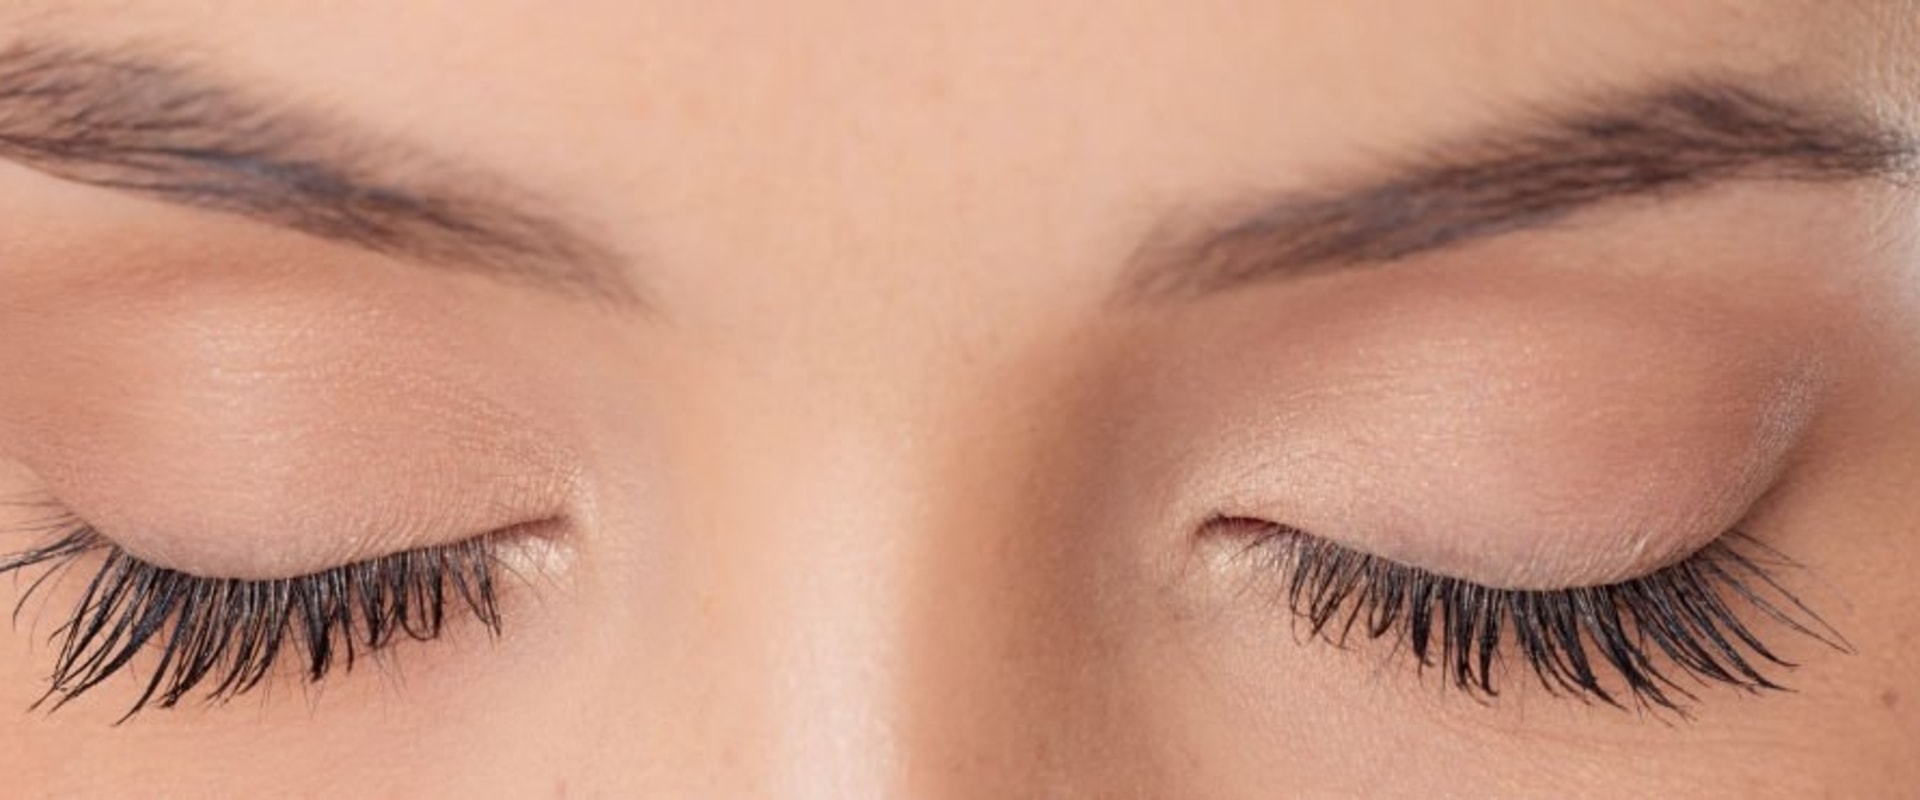 Do eyelash extensions look good on everyone?